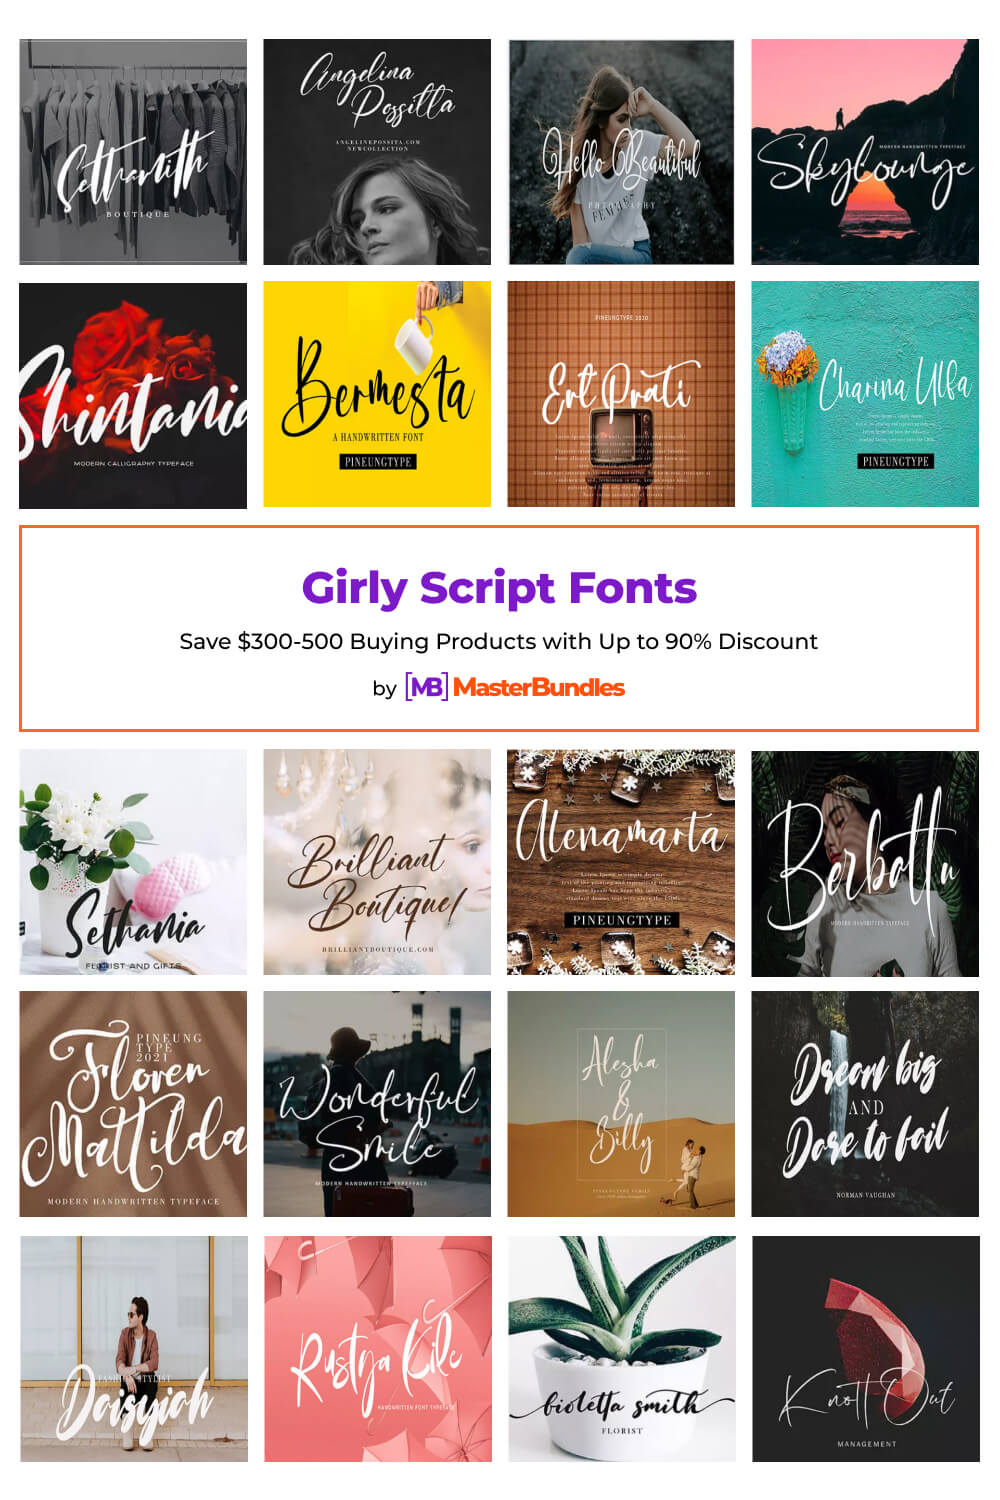 girly script fonts pinterest image.